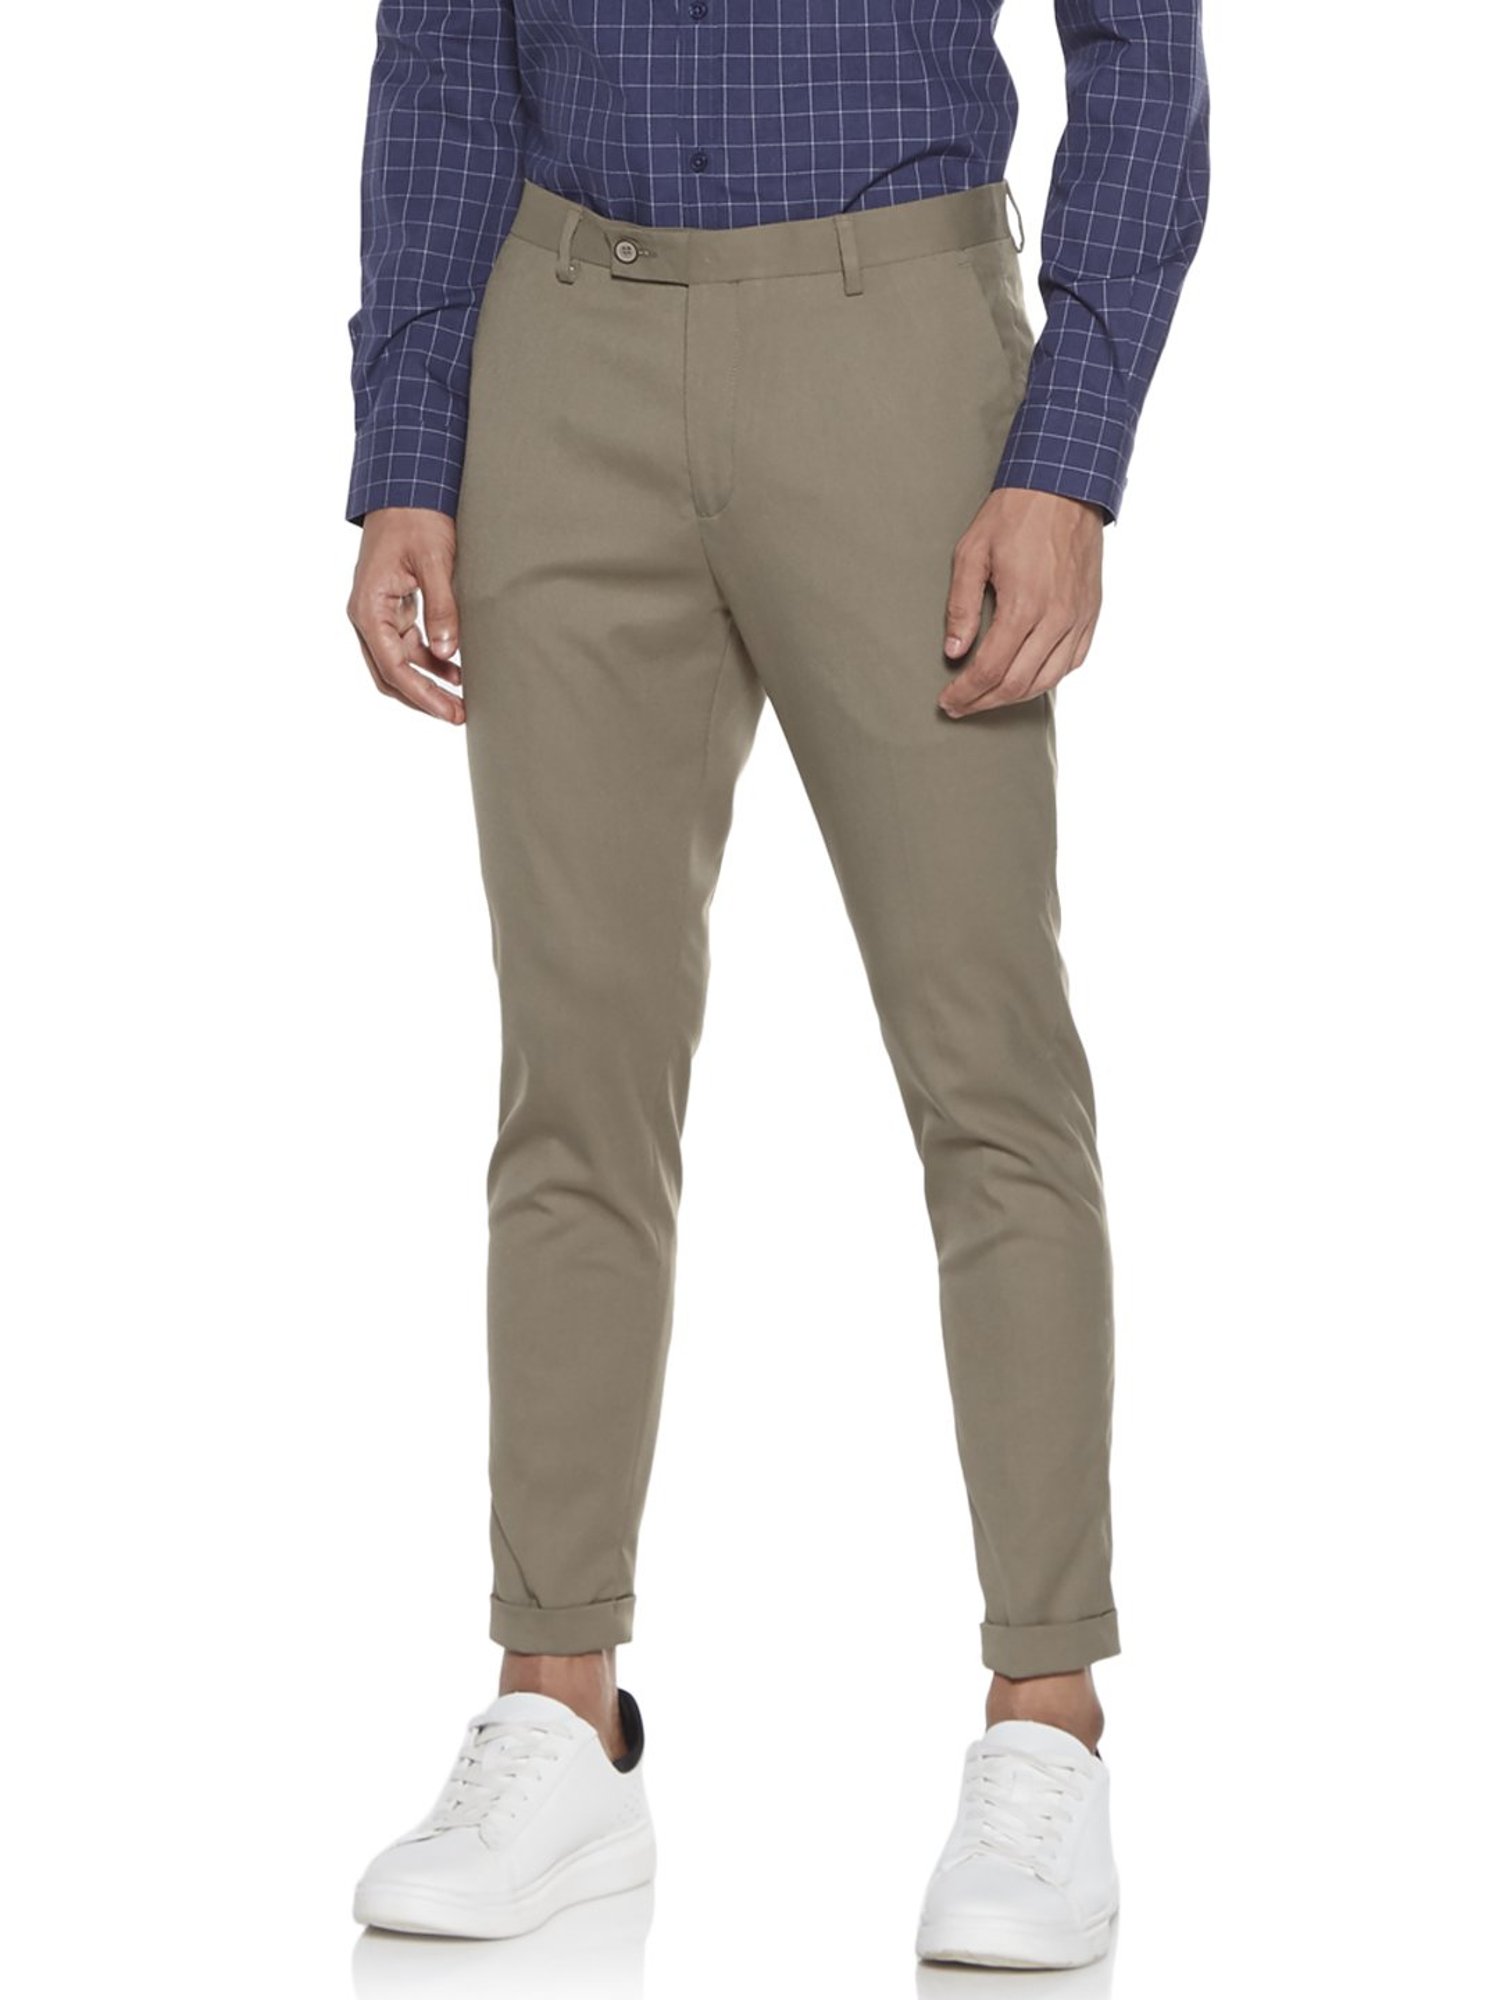 Buy Sage Green Trousers  Pants for Men by AJIO Online  Ajiocom